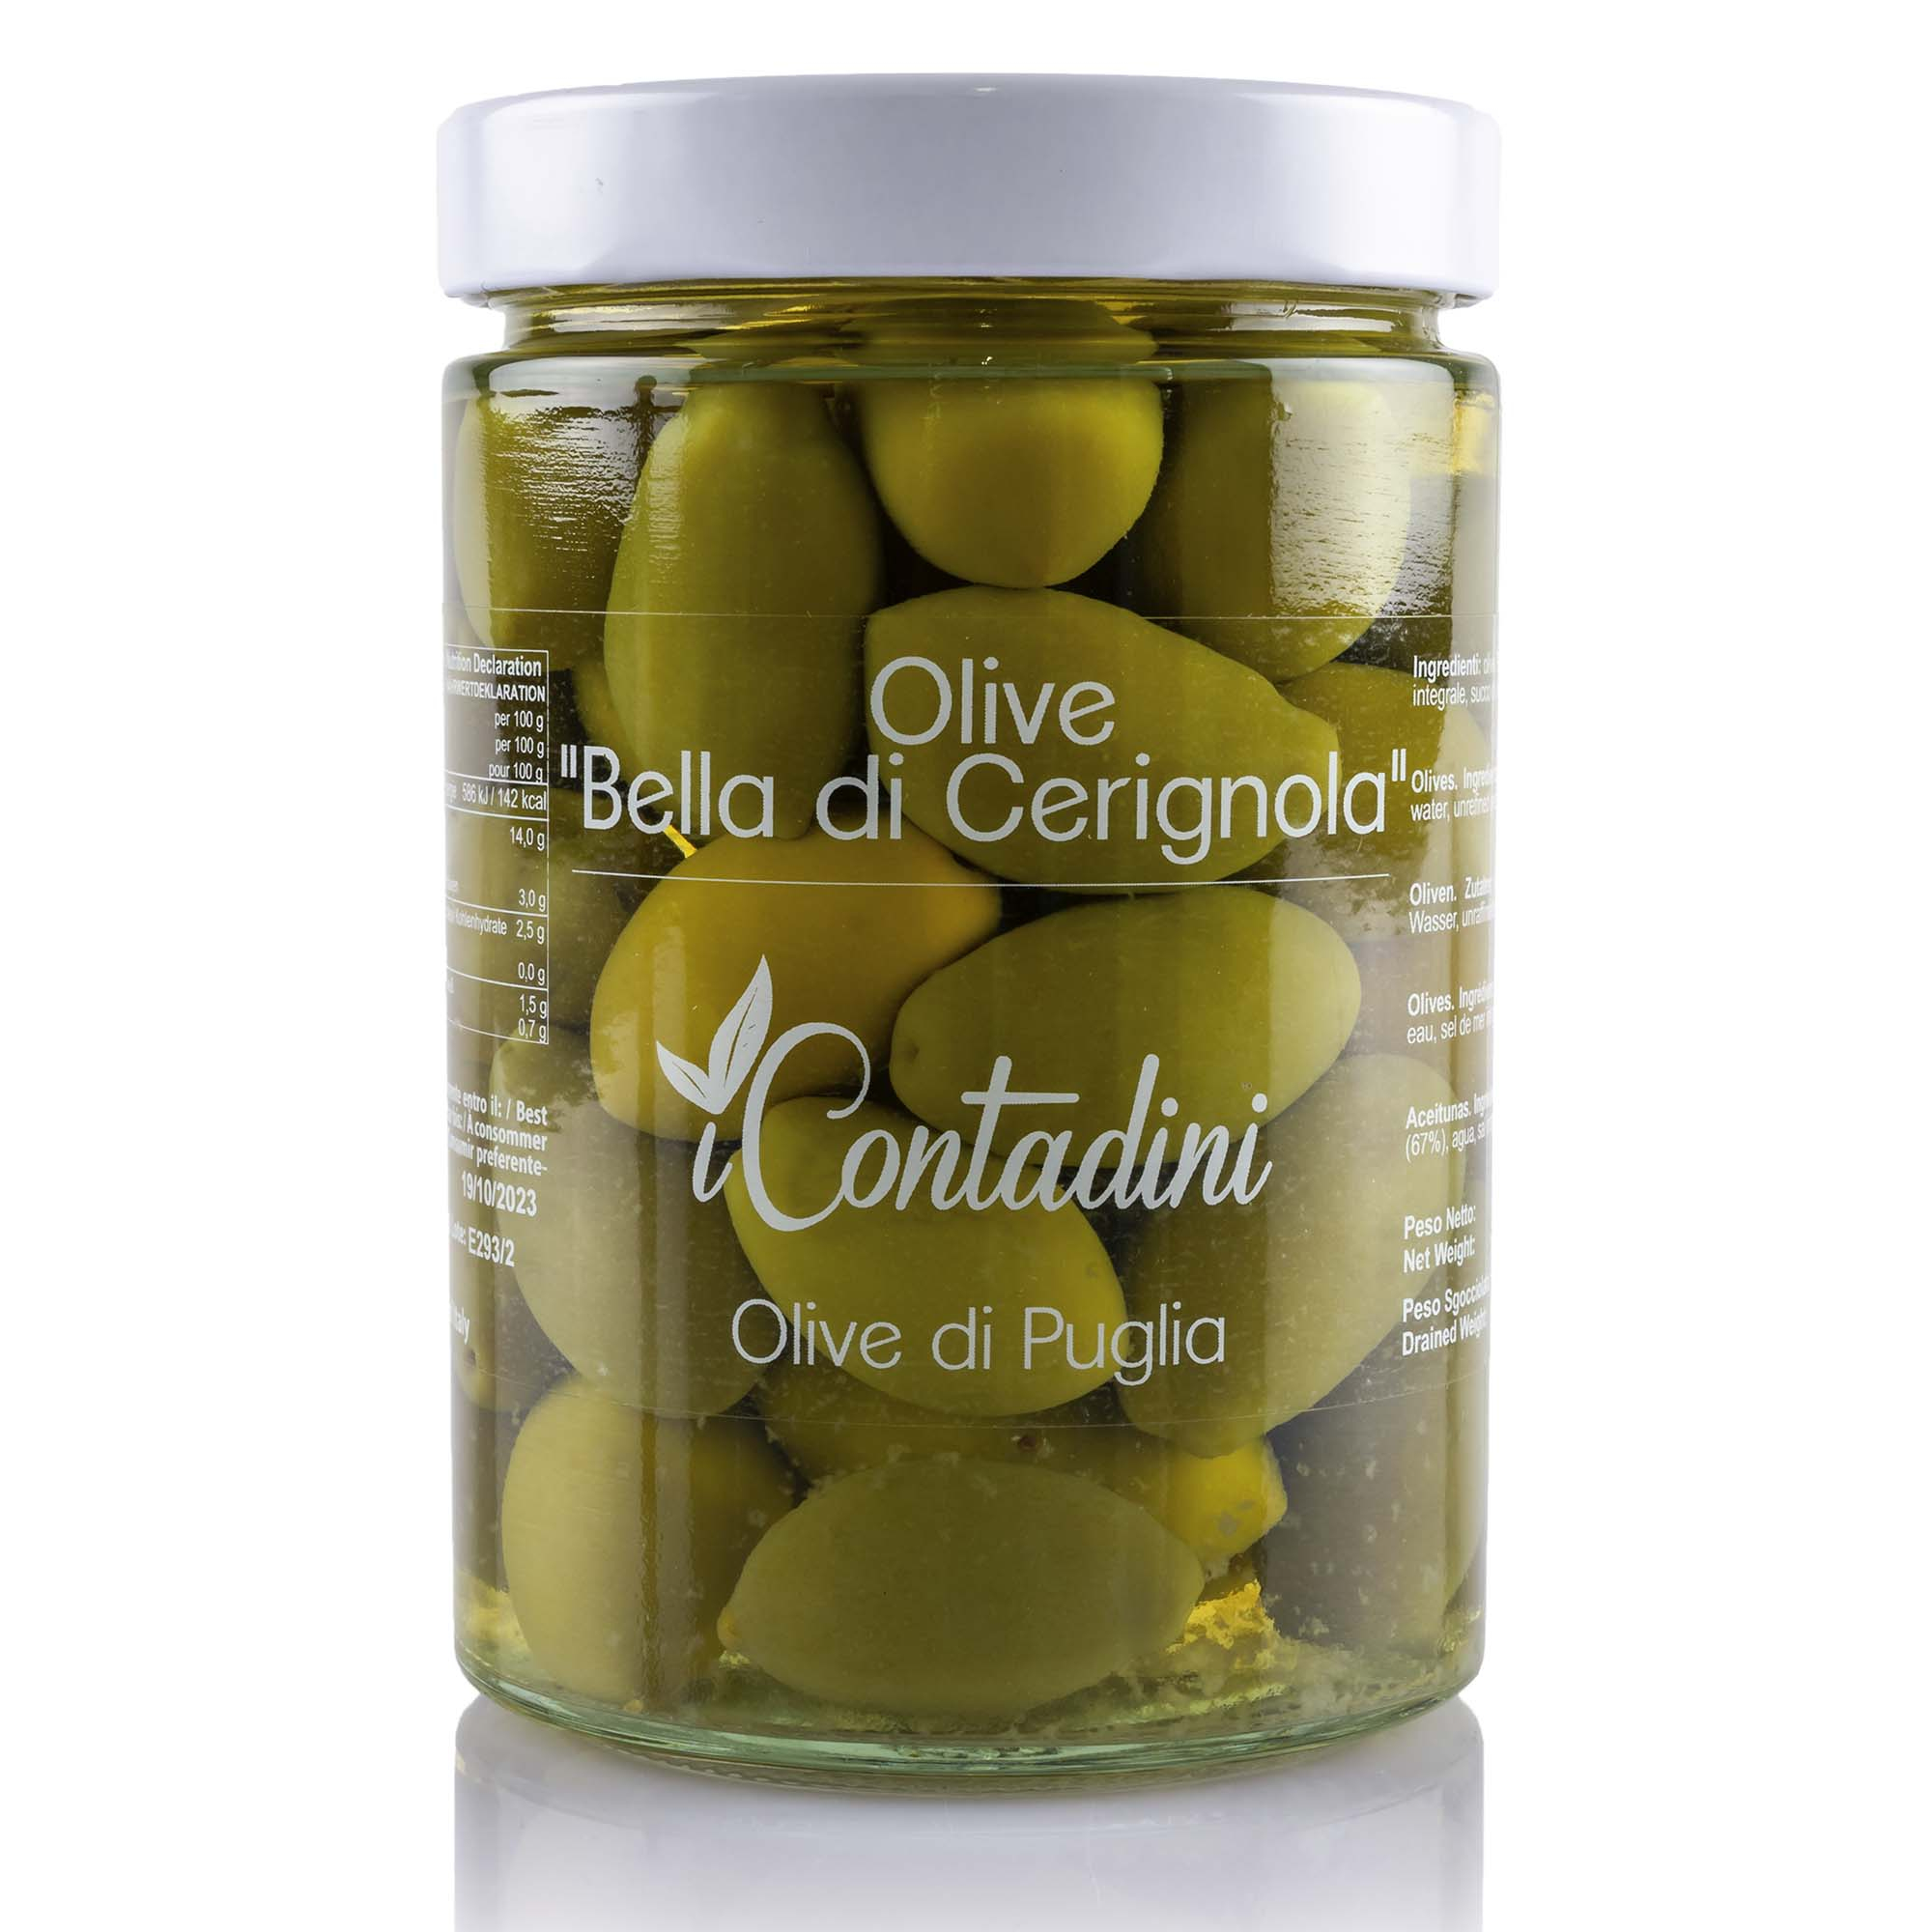 Olive "Bella di Cerignola", 550g